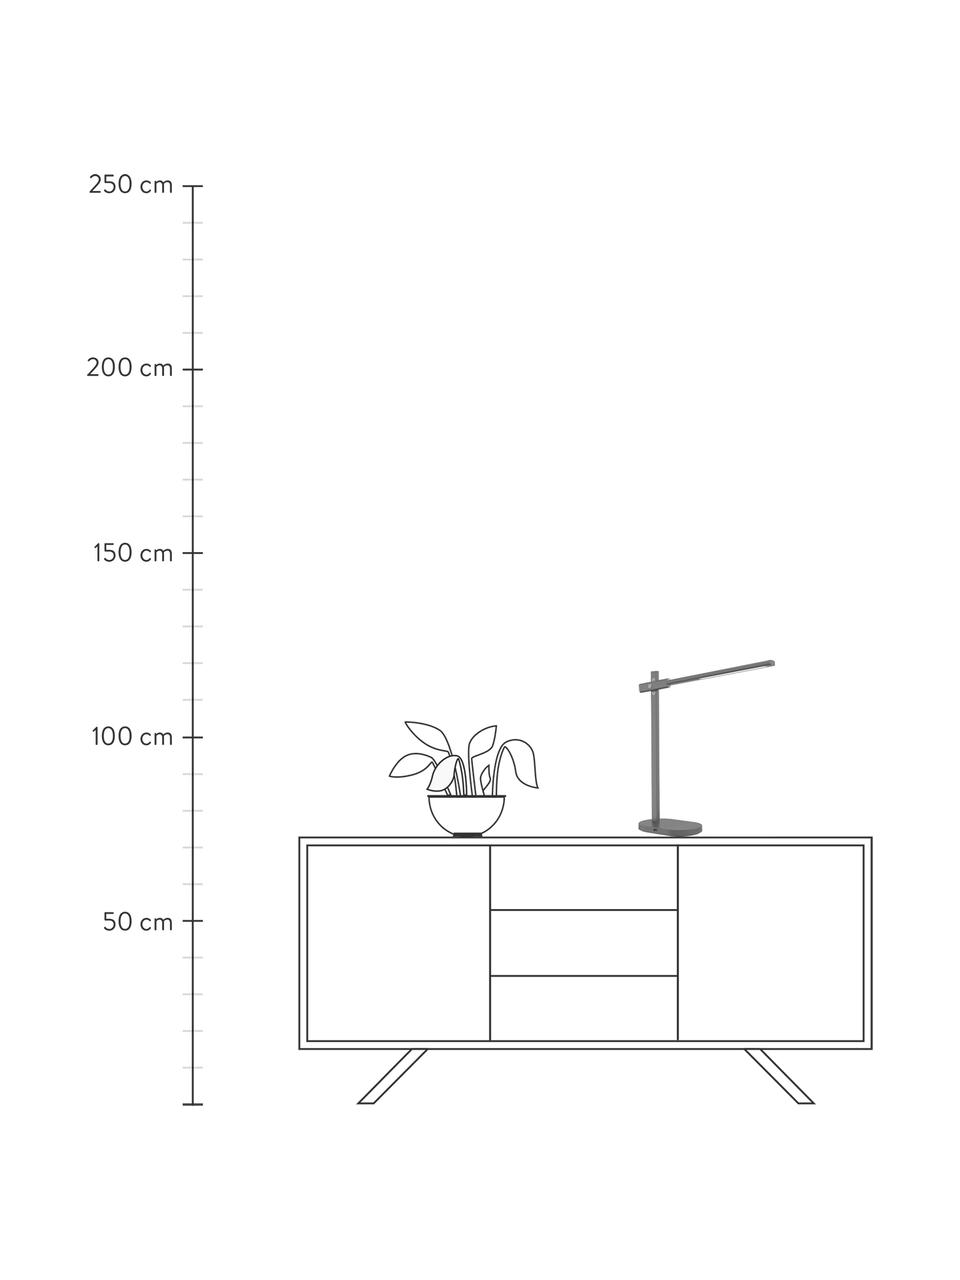 Dimmbare LED-Schreibtischlampe Office mit Touch-Funktion, Lampenfuß: Aluminium, beschichtet, Grau, B 12 x H 48 cm